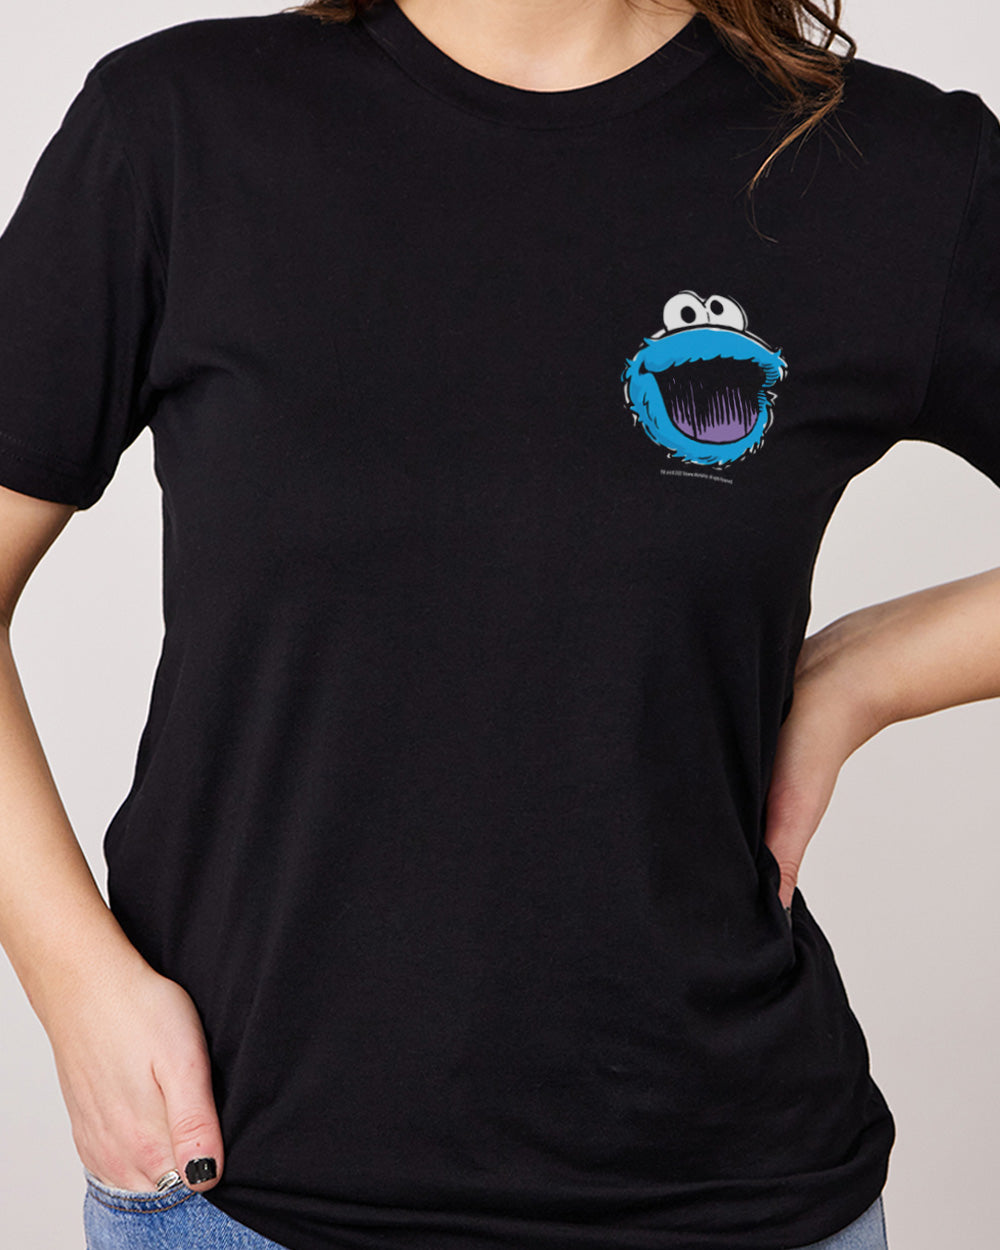 Cookie Monster Face T-Shirt Australia Online